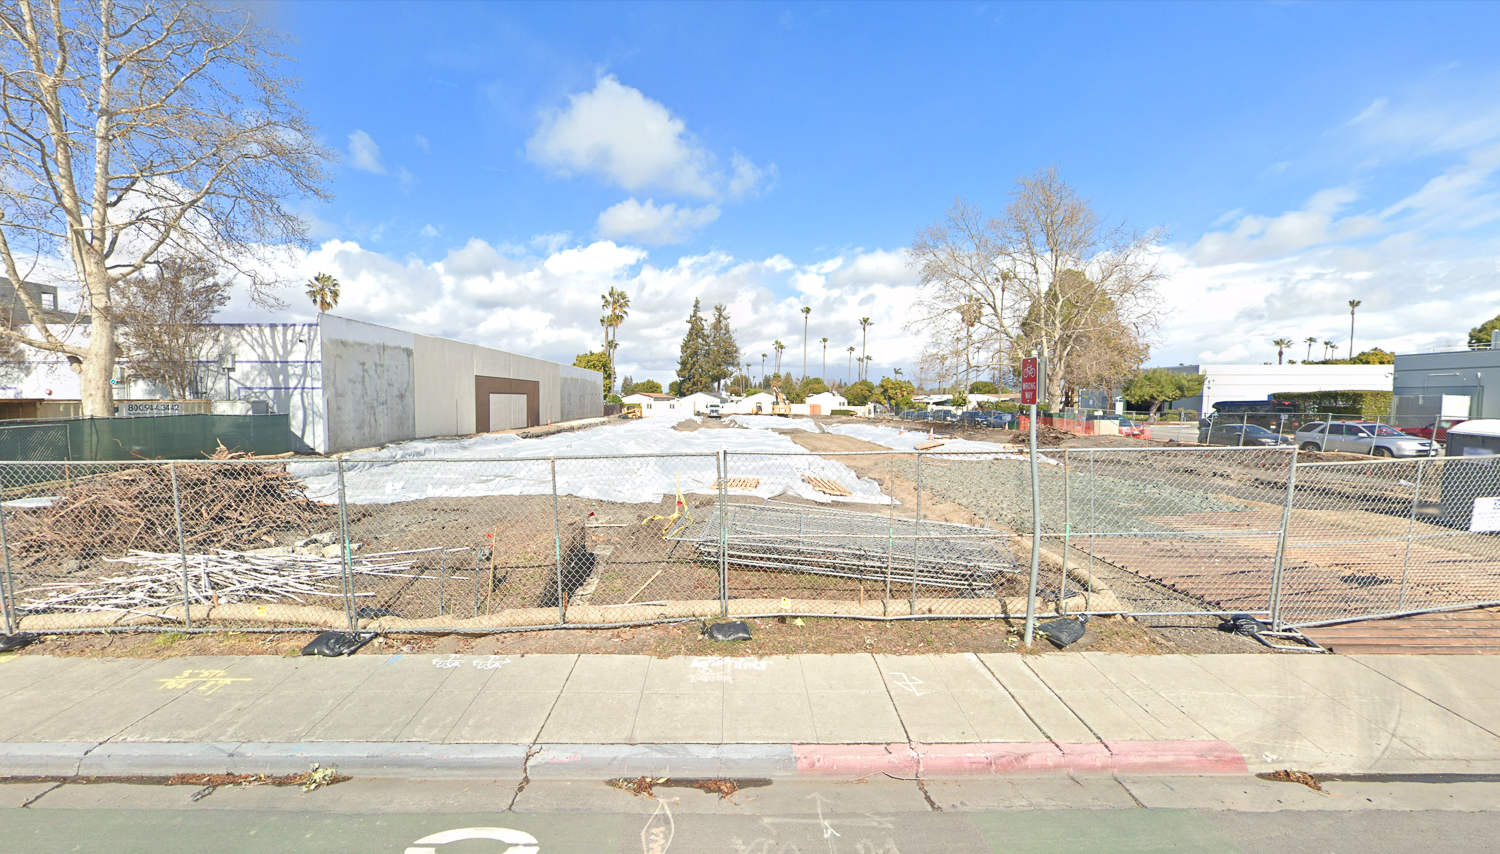 1100 La Avenida Avenue, image via Google Street View from last month